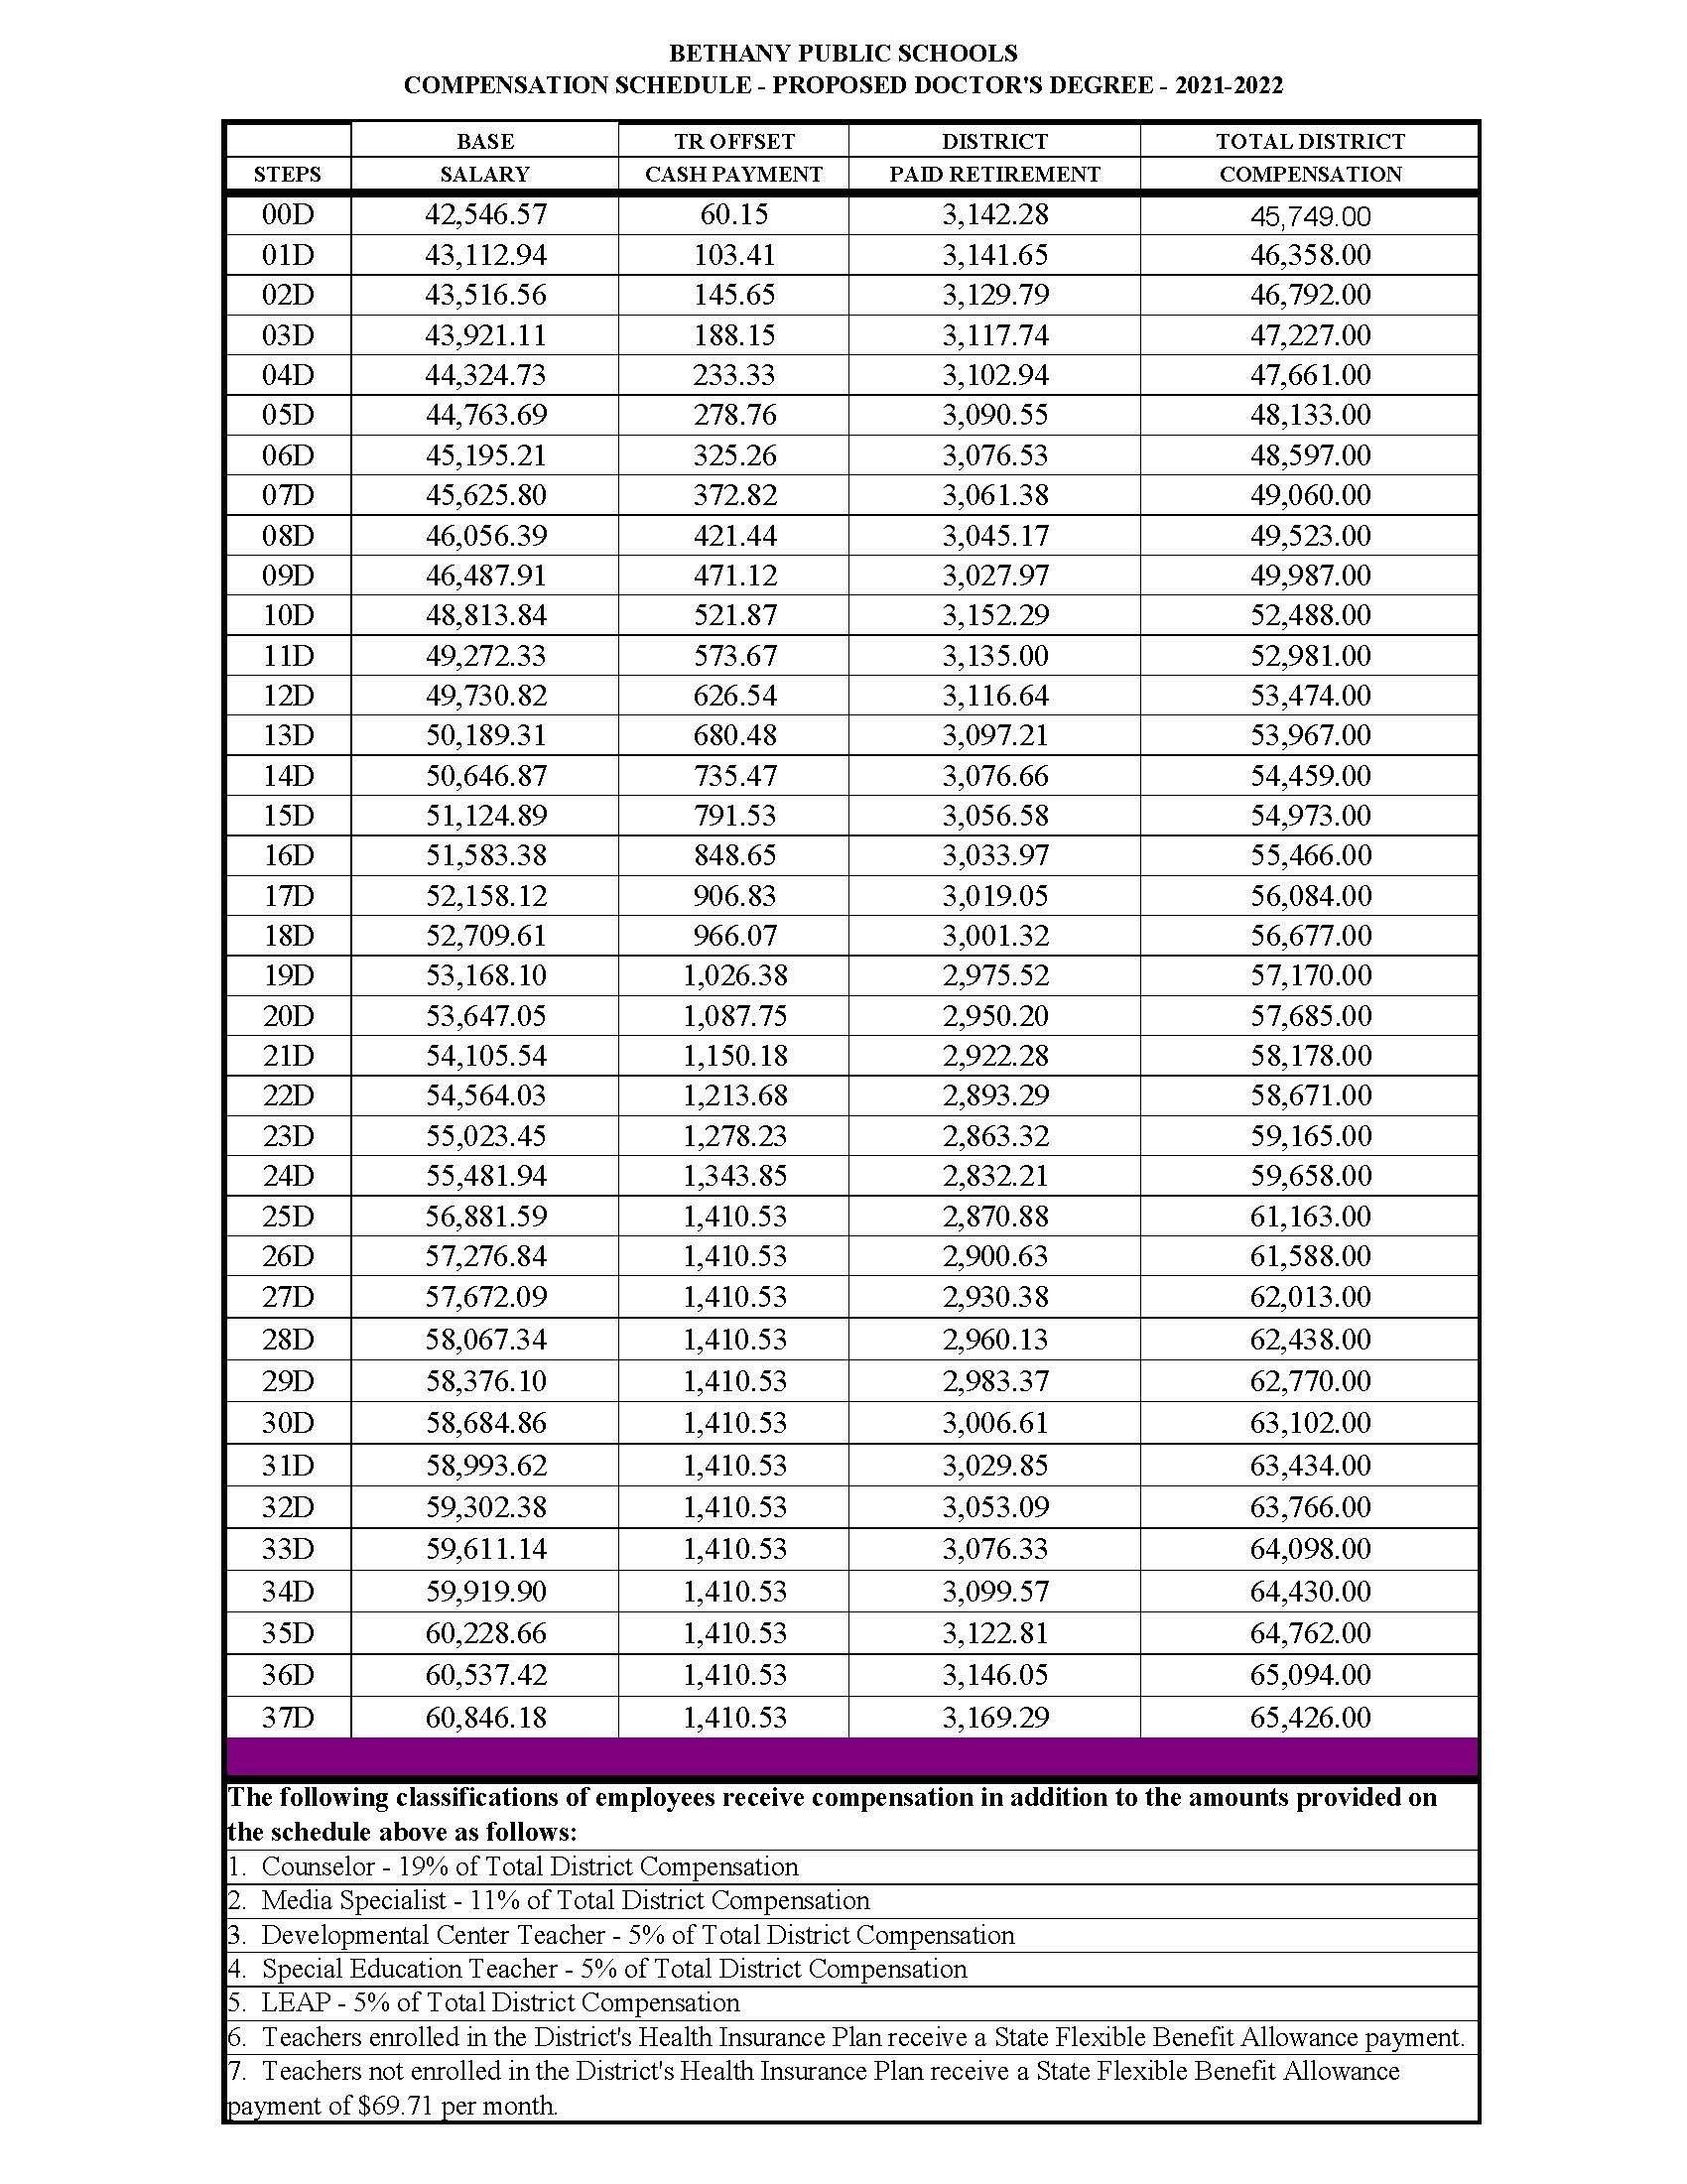 2021-22 Doctorate Salary Schedule